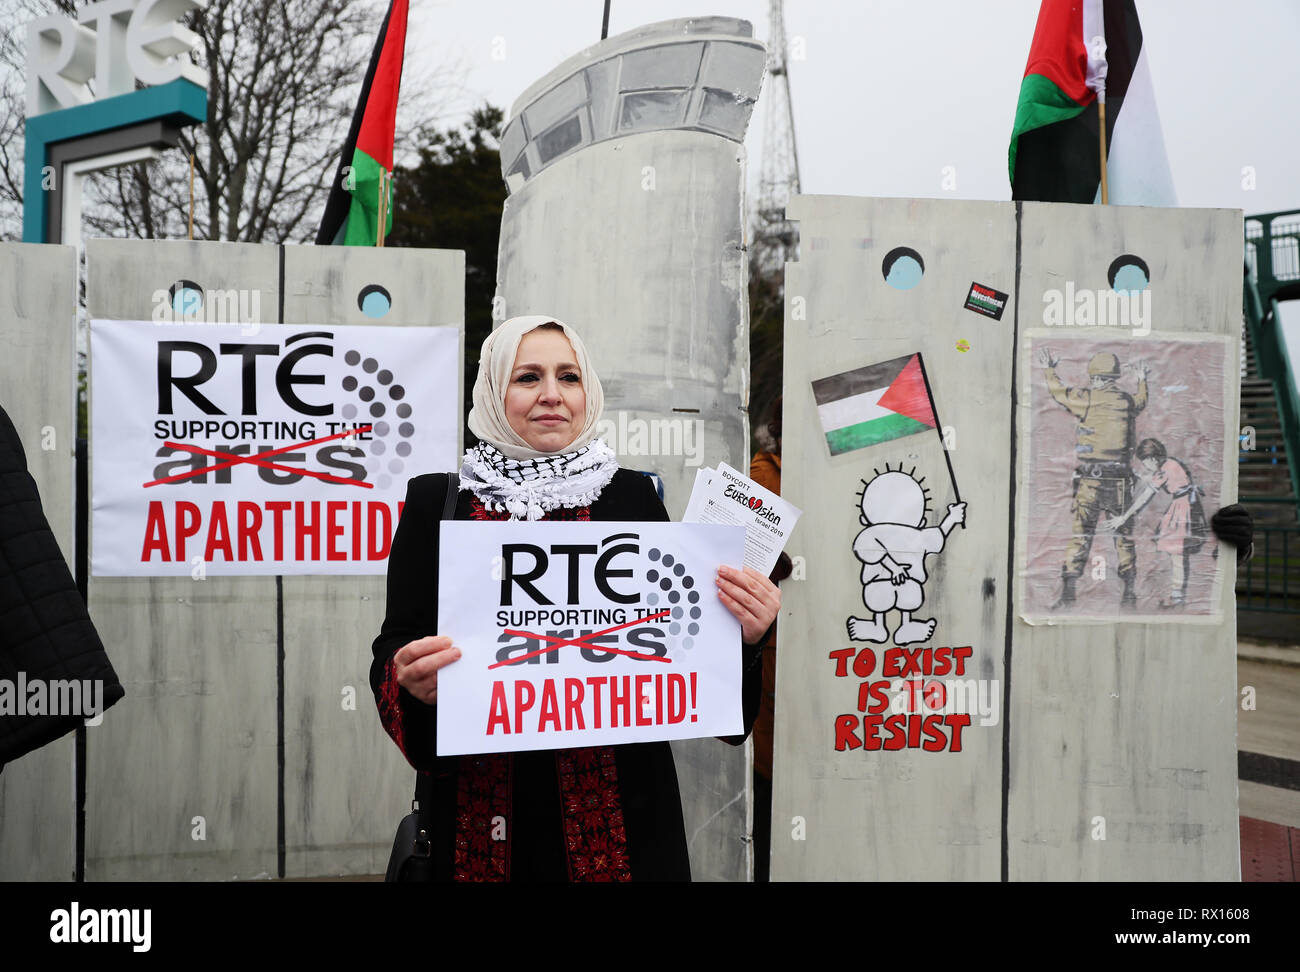 Boycott Israel News: De Beers Diamonds - From Founding Apartheid